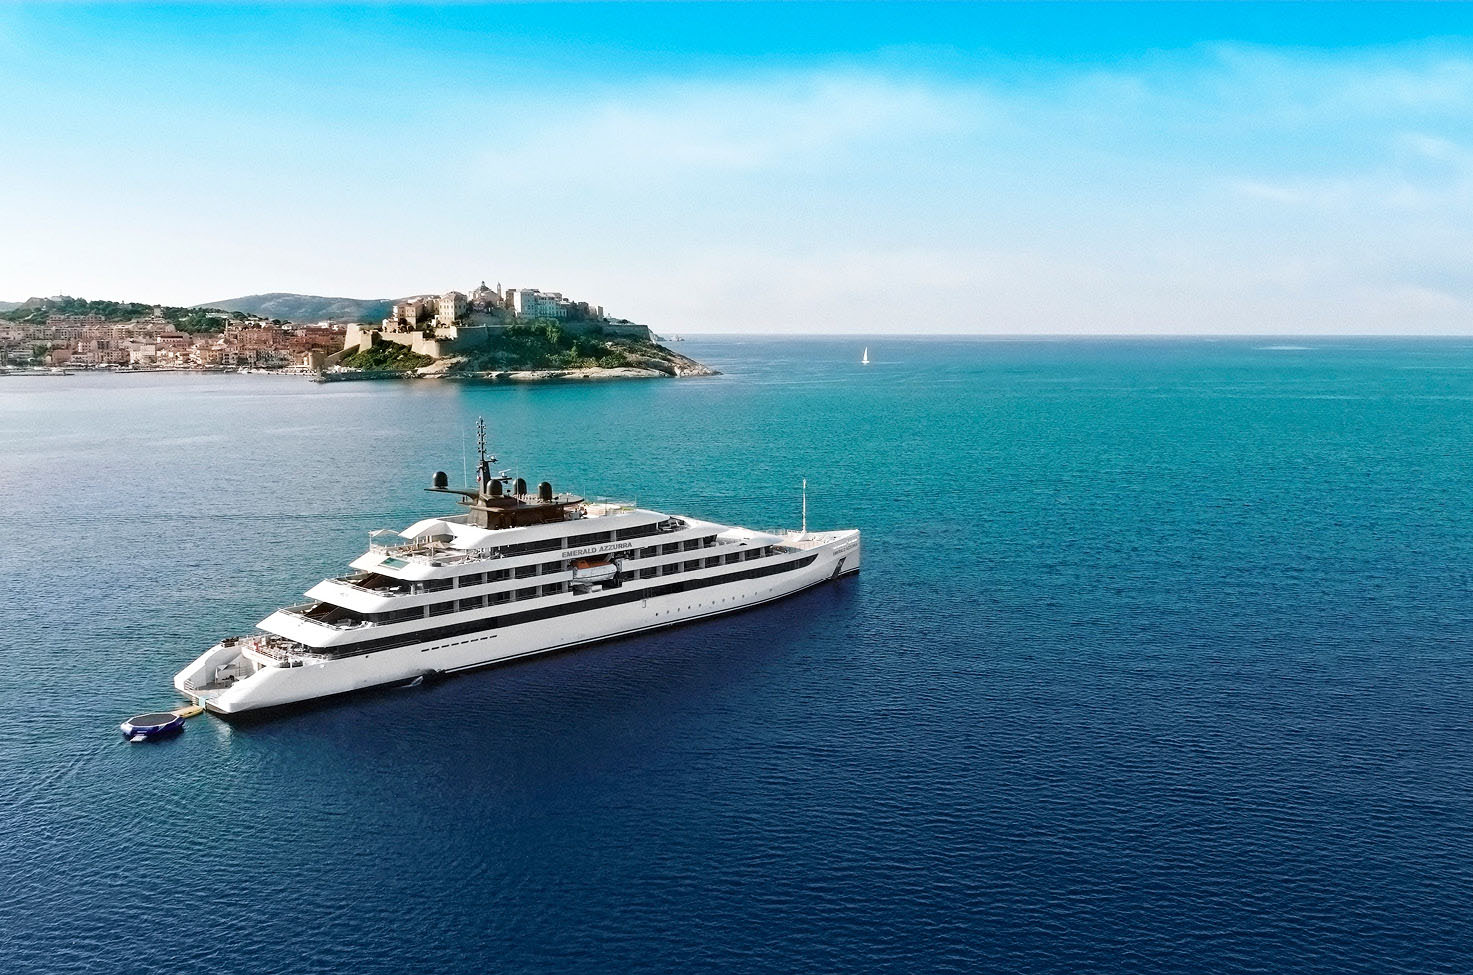 Luxury yacht on calm blue sea sailing past Corsica, under a blue, light cloudy sky 